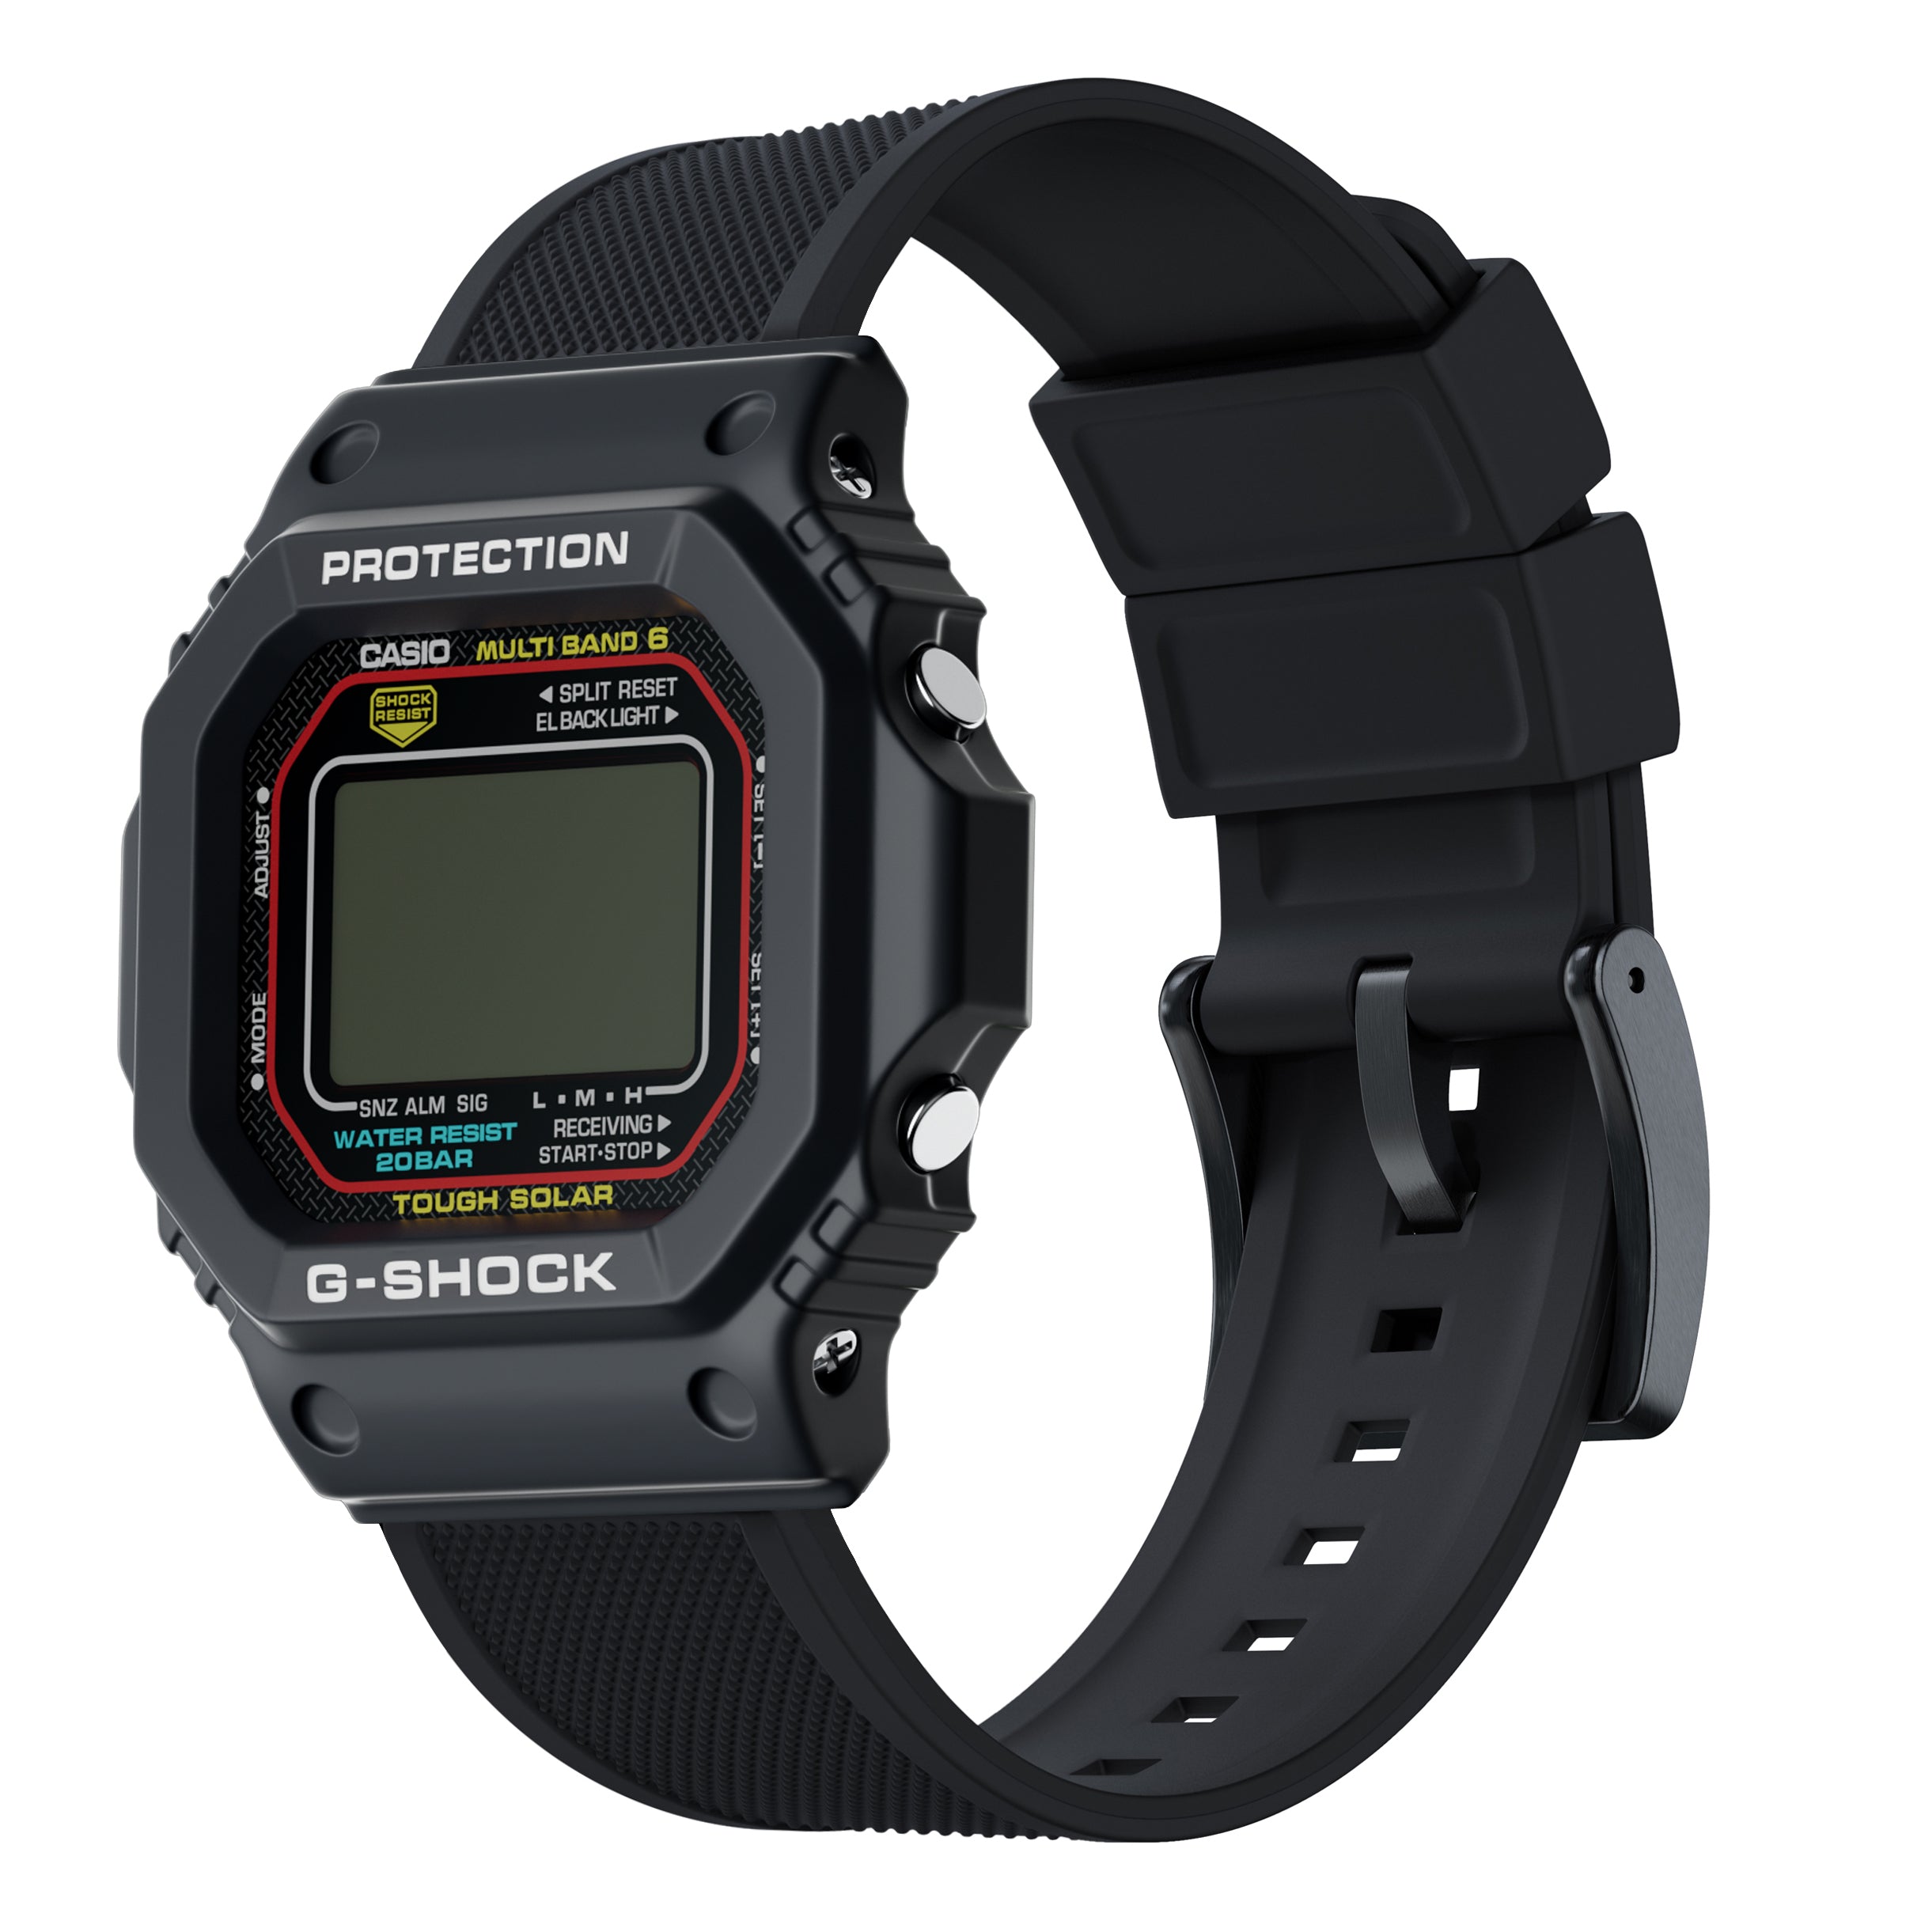 Casio G-Shock Oneness Kentucky Bourbon Watch Review DW5600ONS234 –  StrapHabit